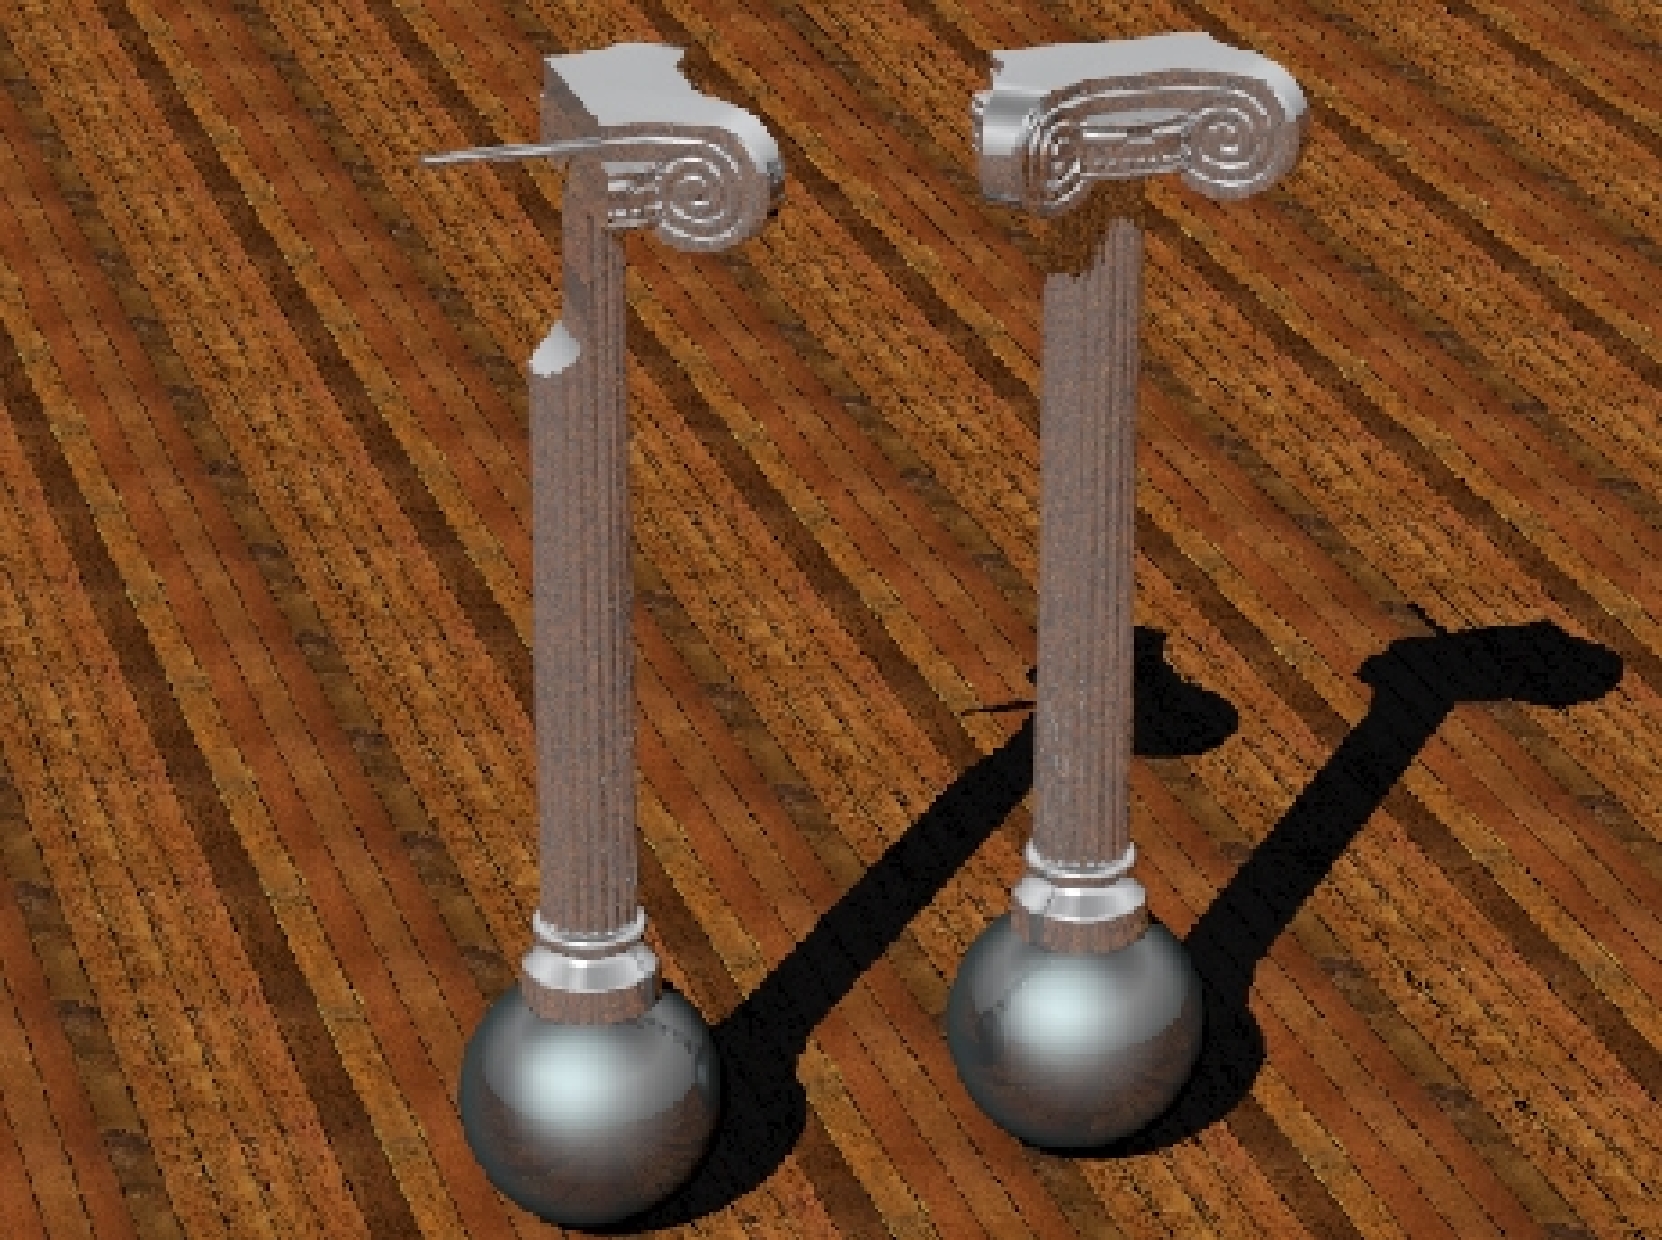 Model for potential drop pearl earrings inspired by Greek columns.